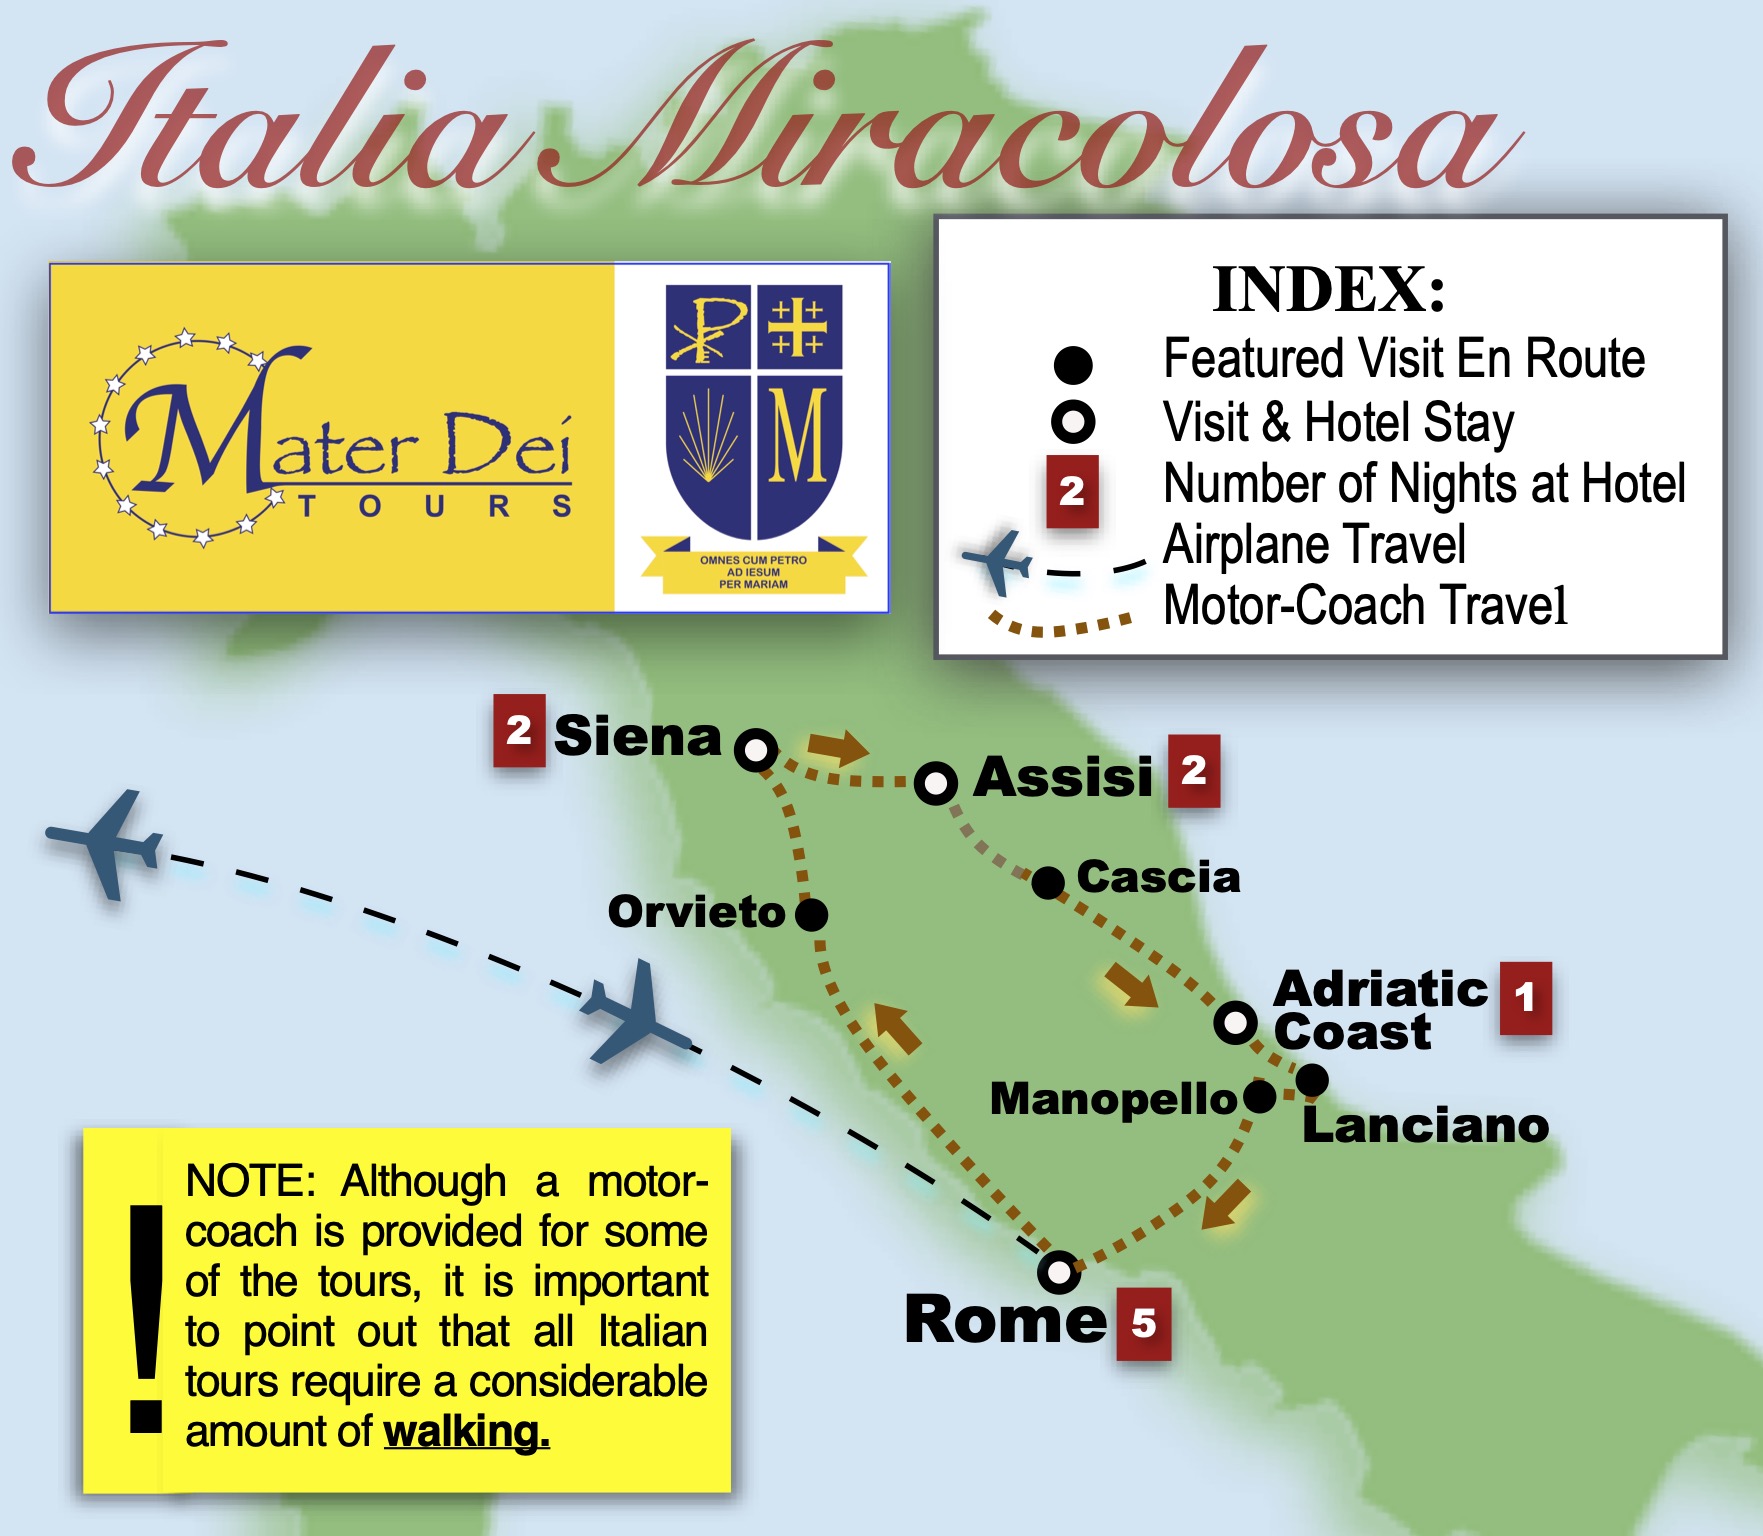 MAP_-_ITALIA_MIRACOLOSA.jpg